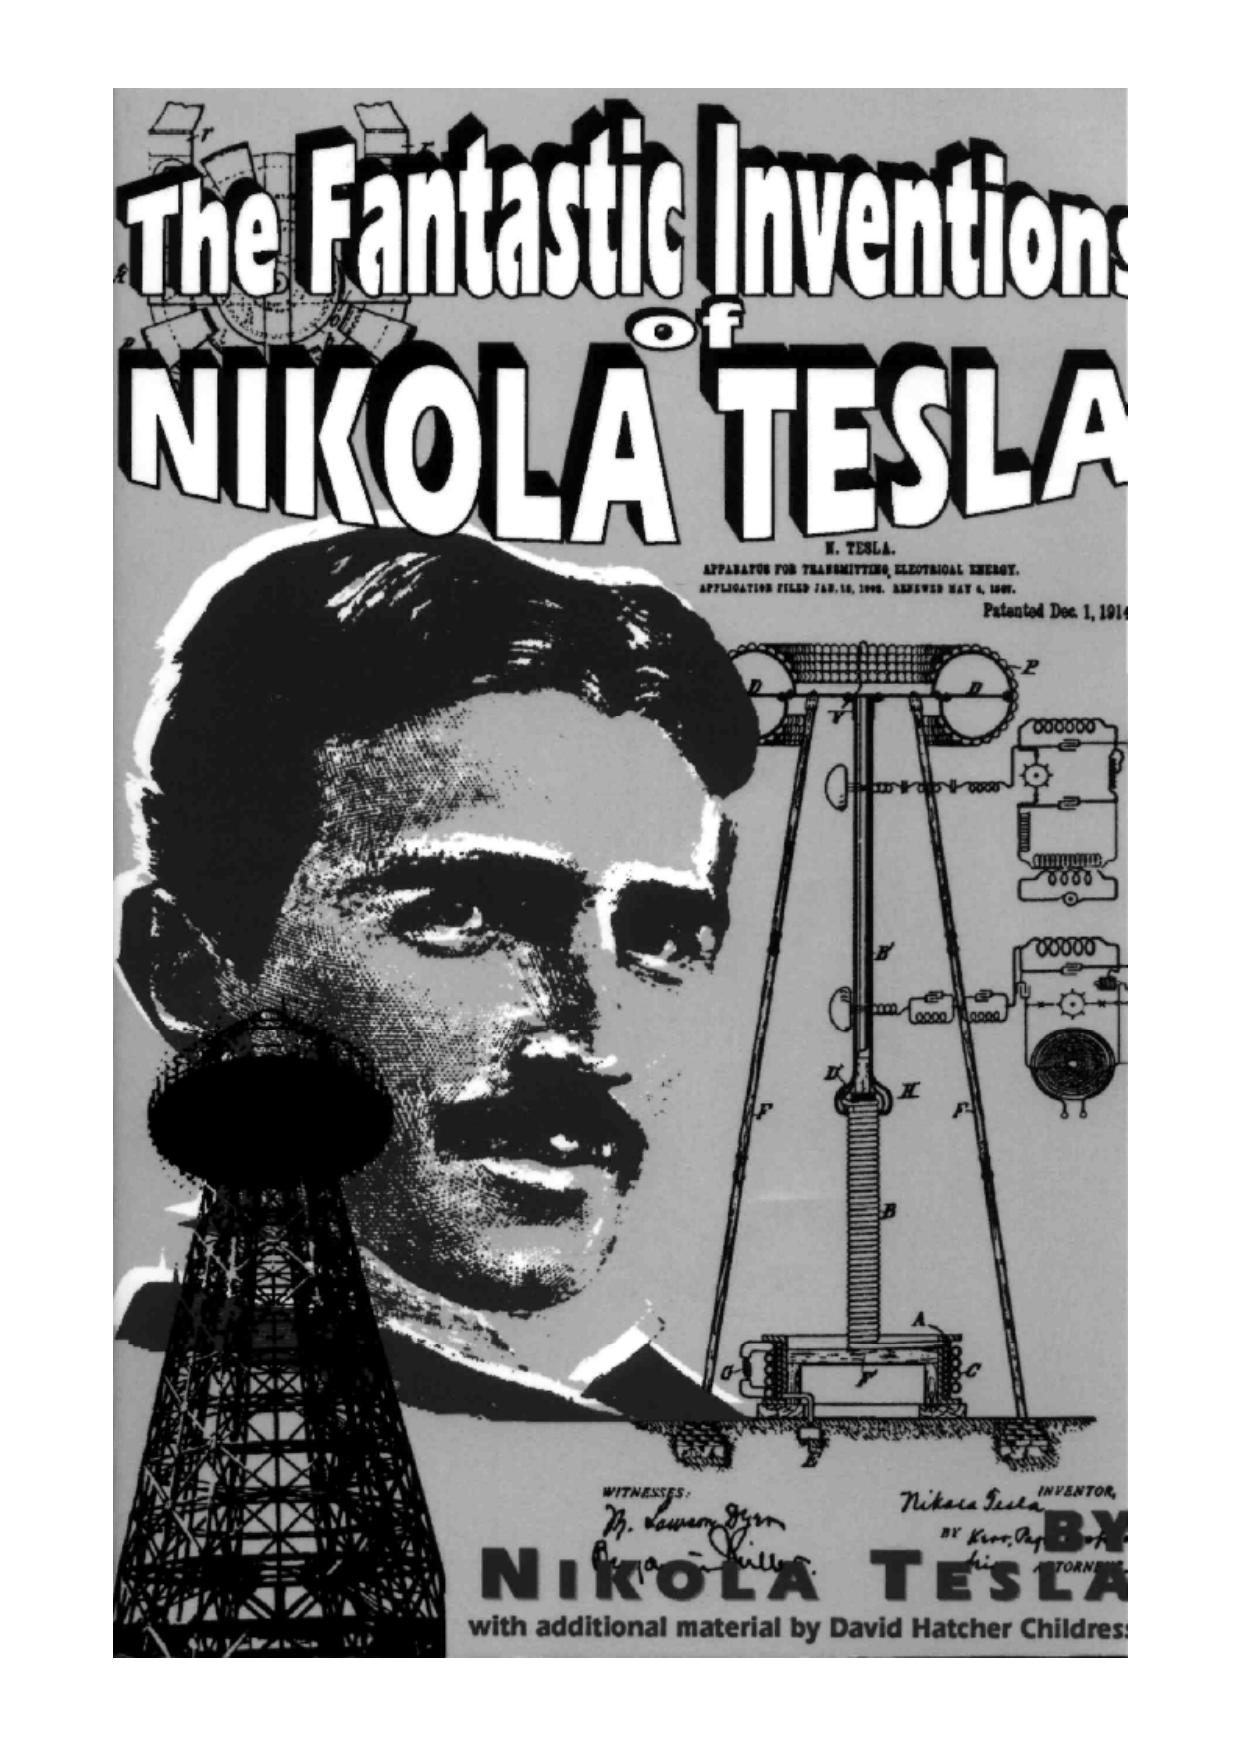 The Fantastic Inventions of Nicola Tesla